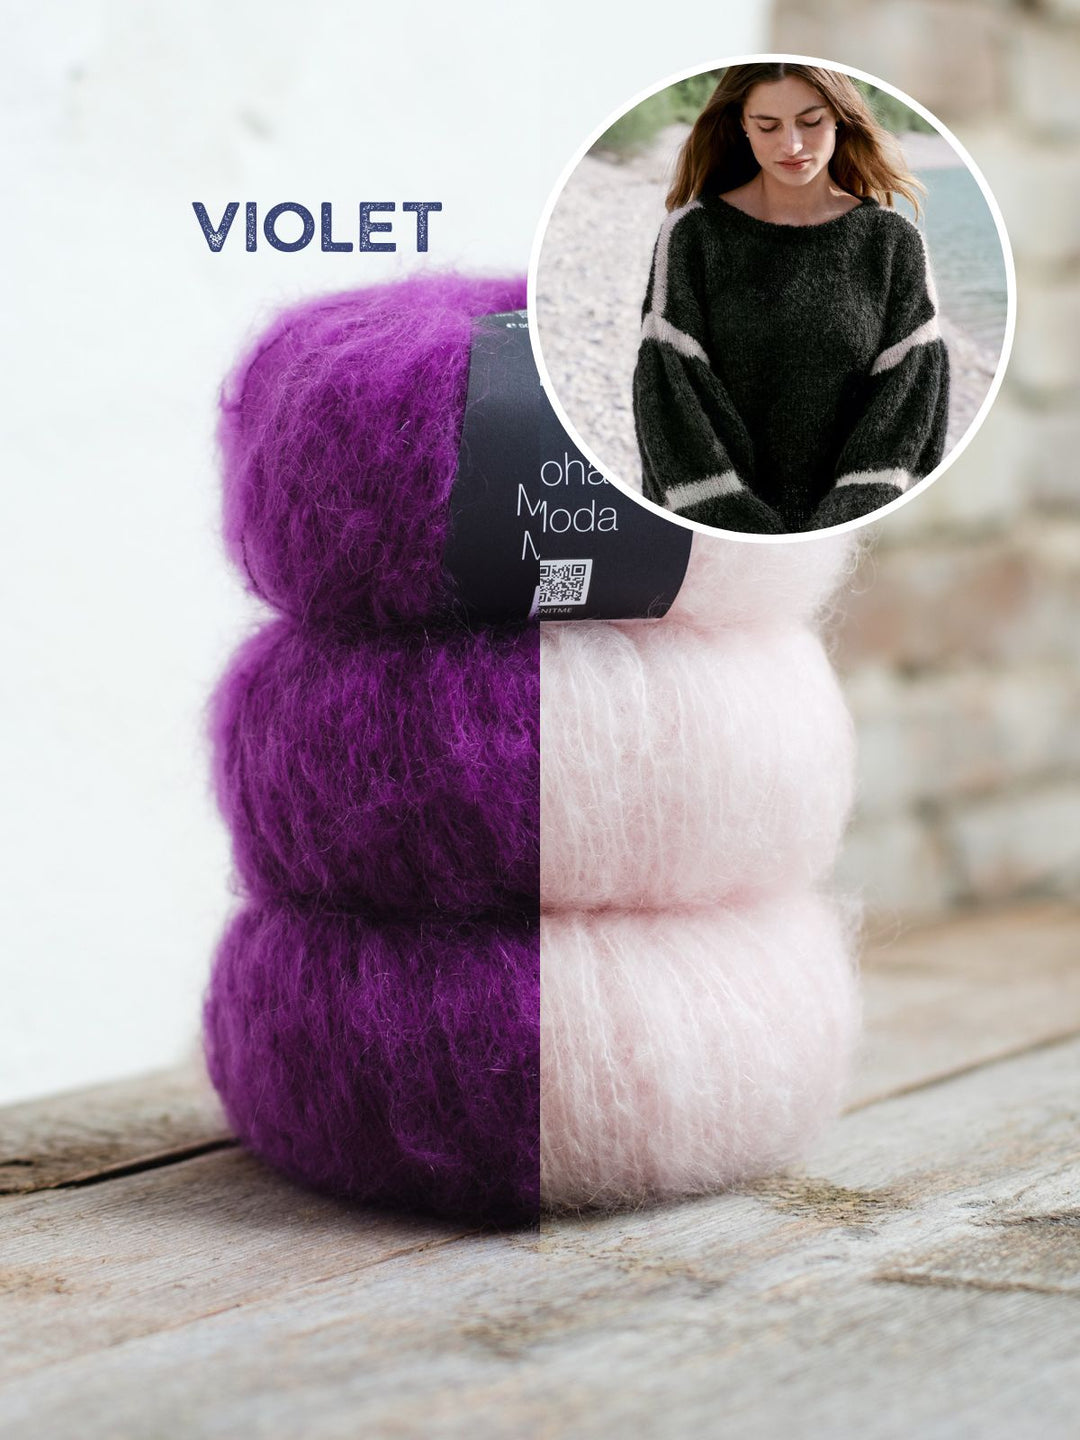 Strickpaket Mohair Moda Pullover mit gesmokten Ärmel